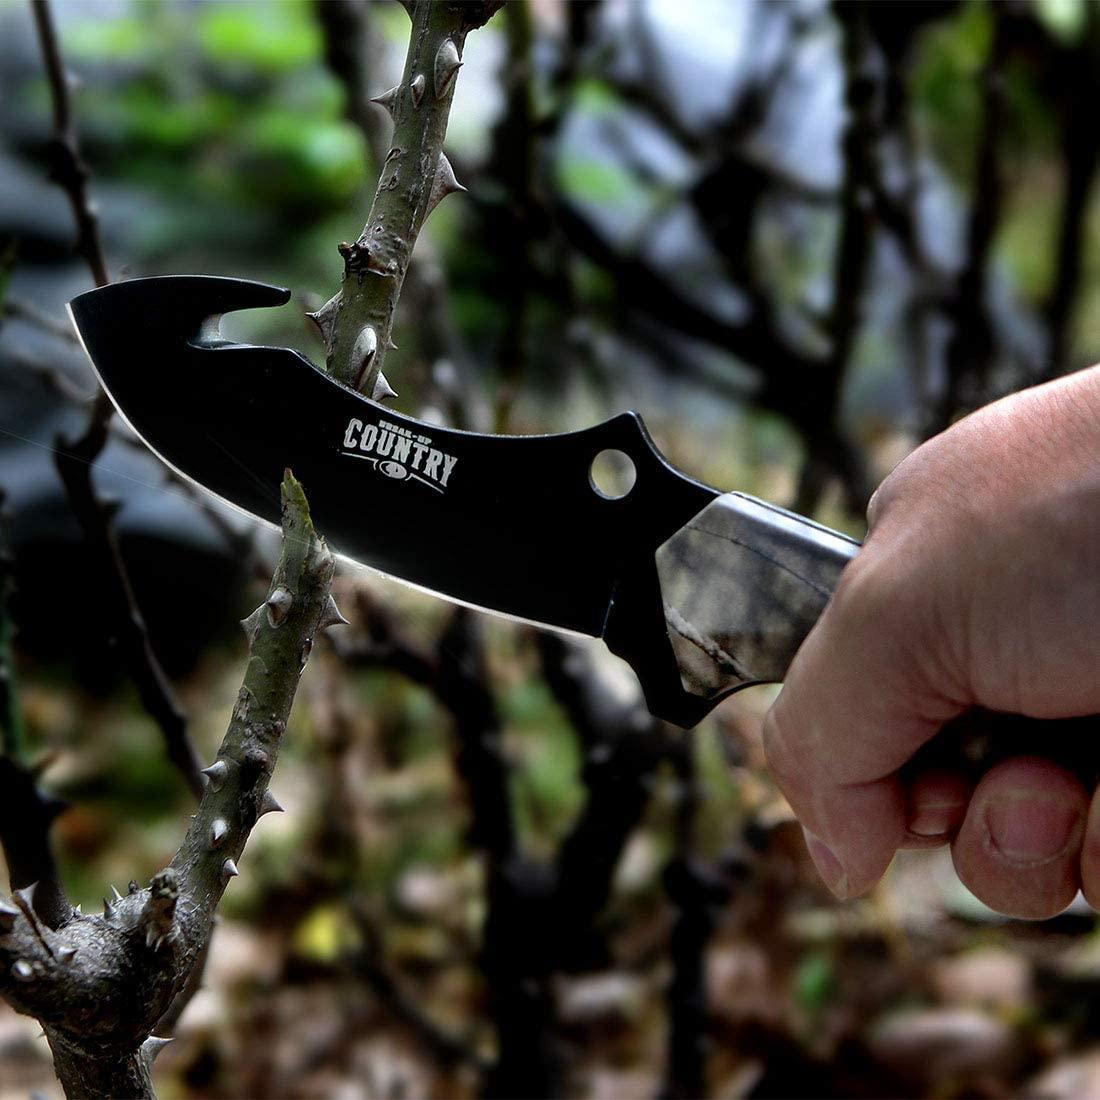 SE Spring Assisted Drop Point Folding Knife with Grassland Digital